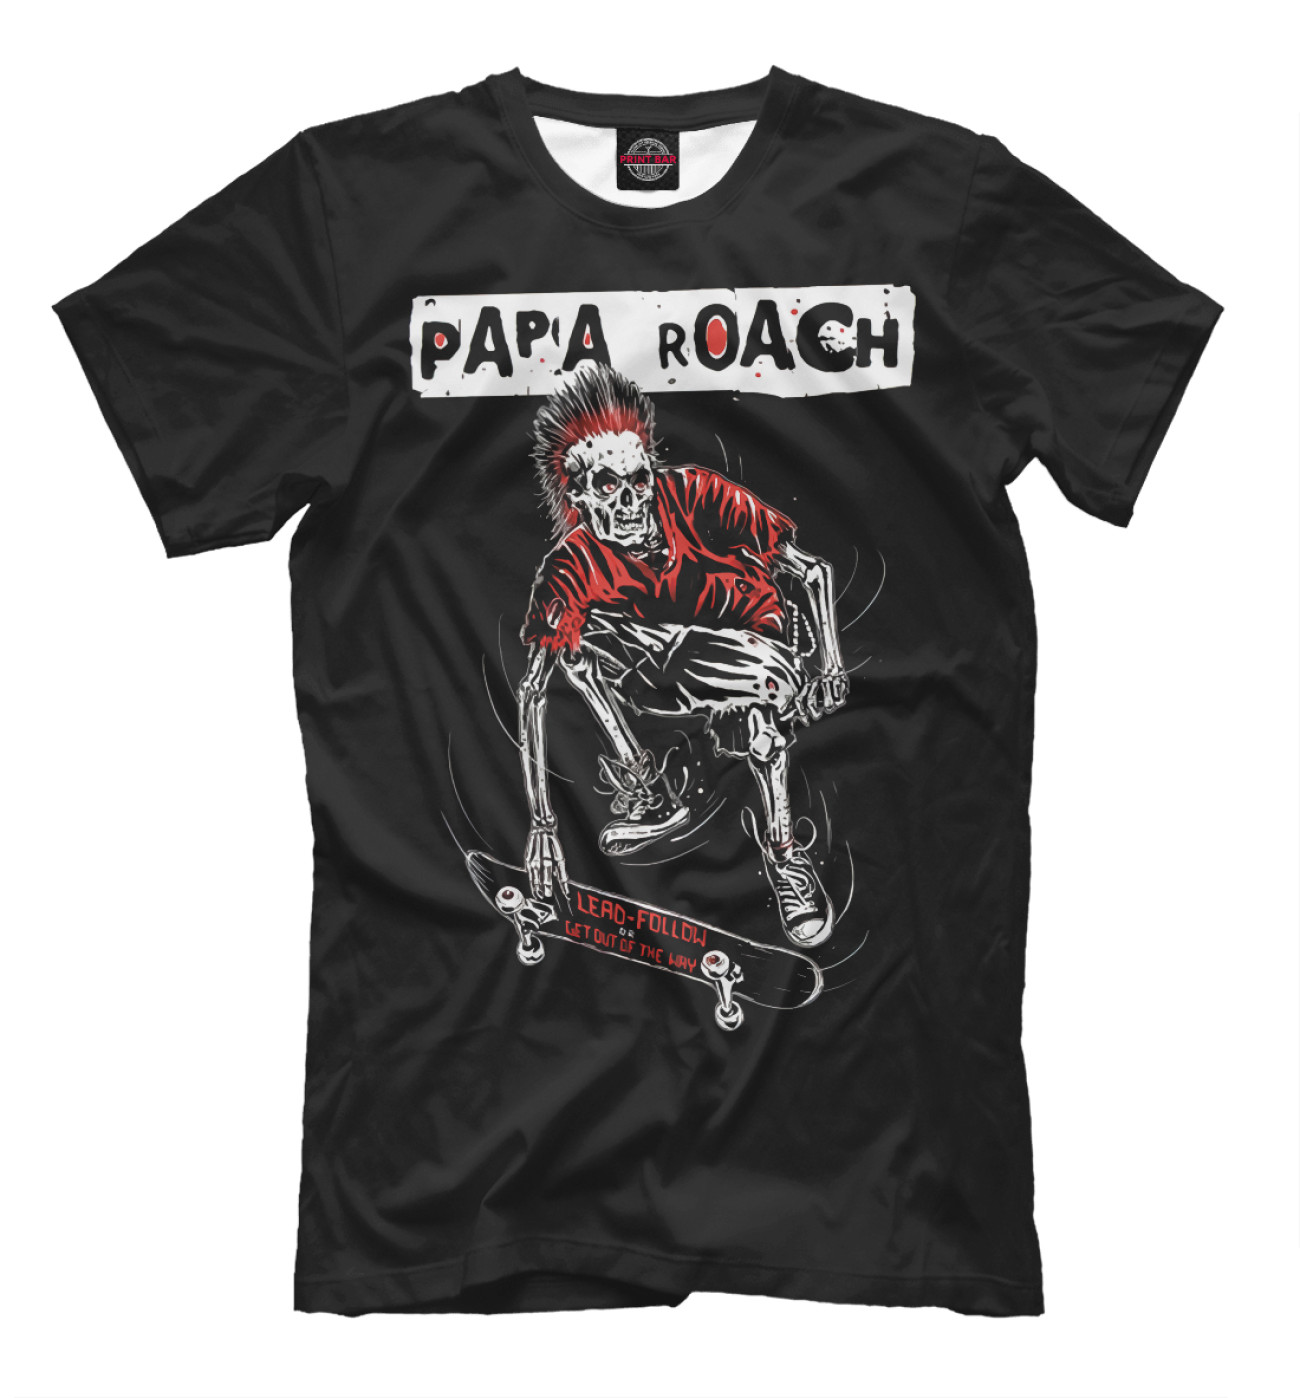 Мужская Футболка Papa Roach, артикул: PPR-369488-fut-2